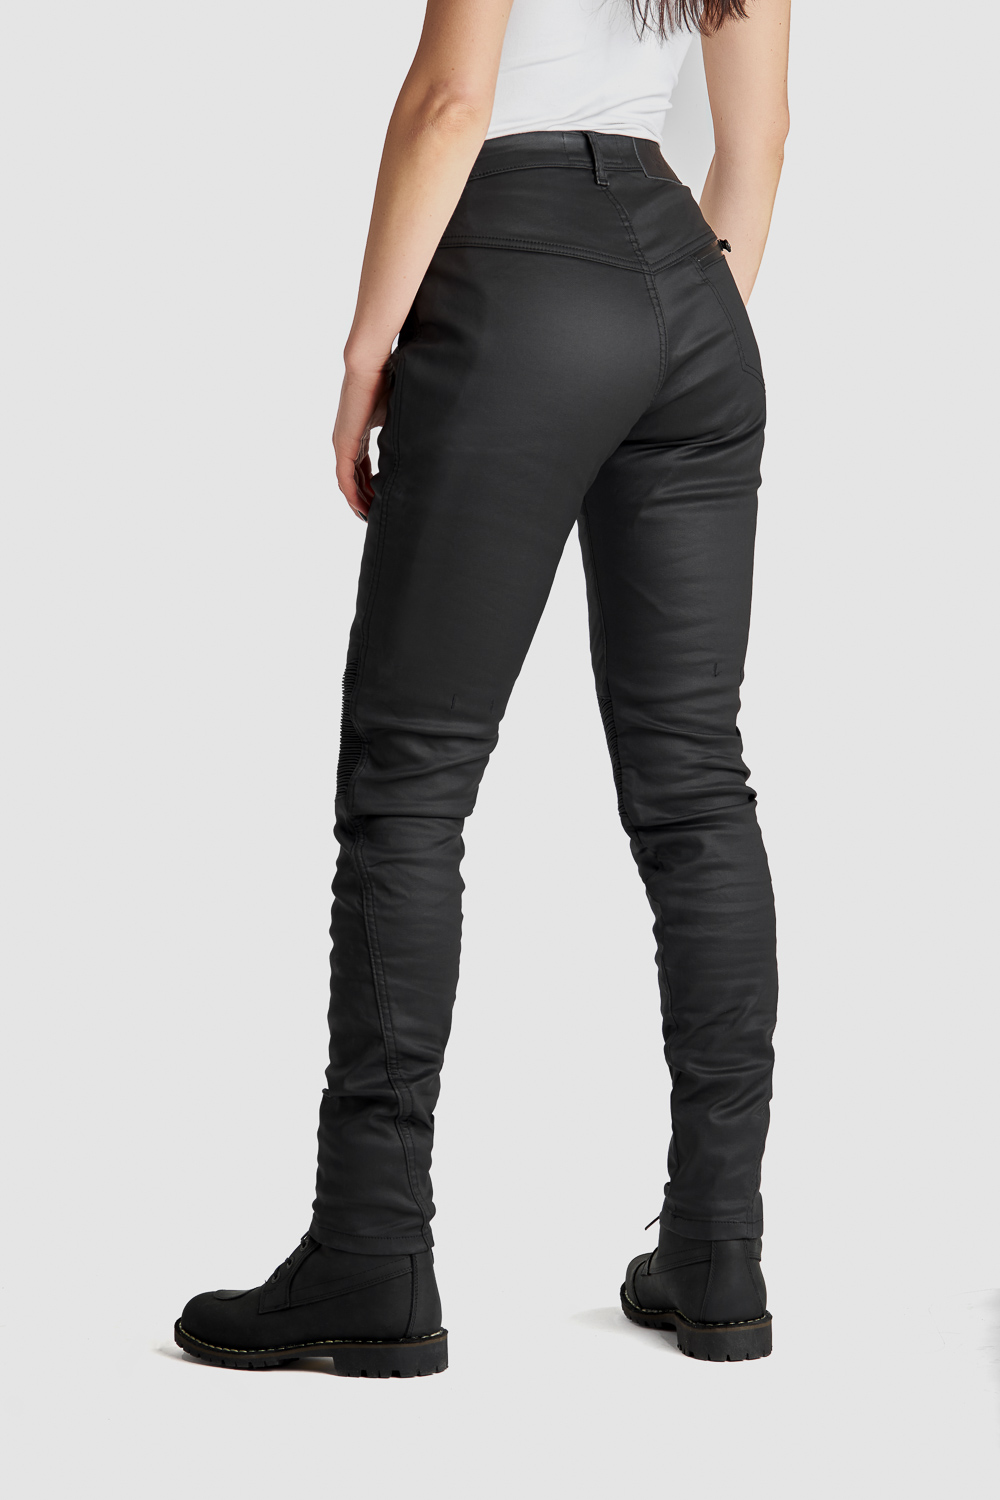 KUSARI KEV 02 – Women Motorcycle Jeans Slim-Fit Kevlar® 2